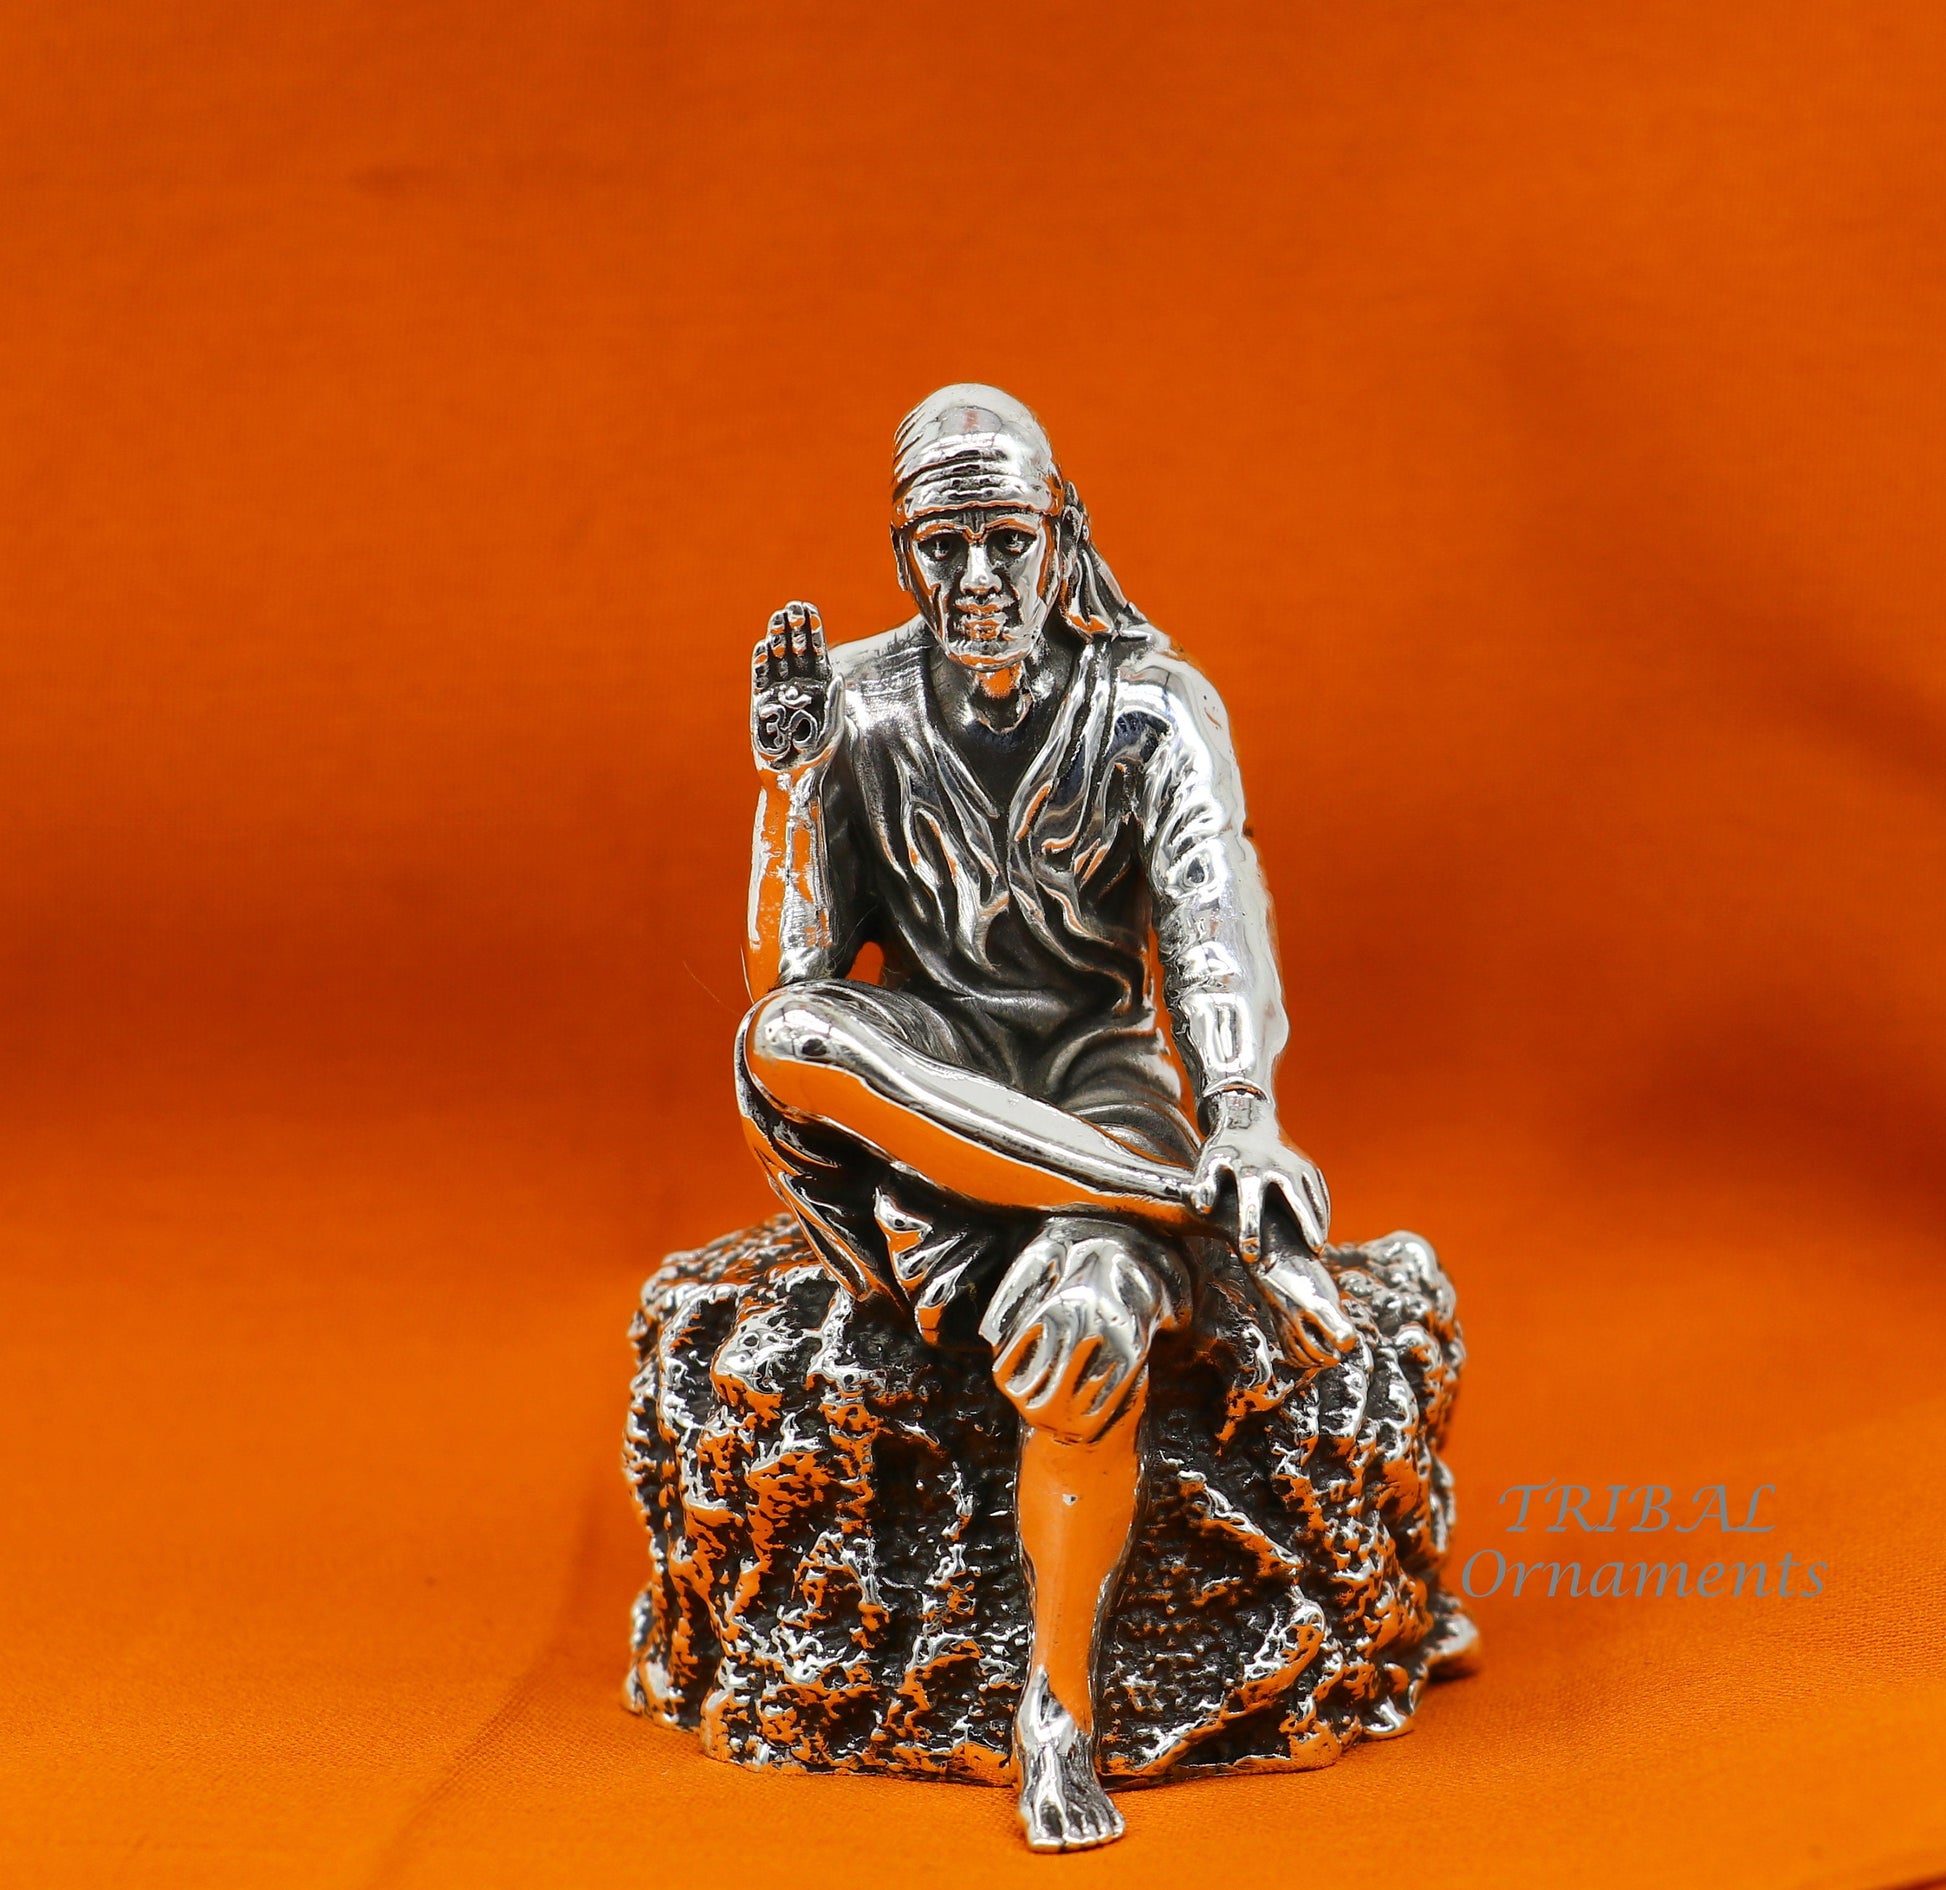 3" 925 sterling silver handmade Divine Hindu idol deity Sai Baba statue murti divine Statue Sculpture figurine puja article gifting art576 - TRIBAL ORNAMENTS